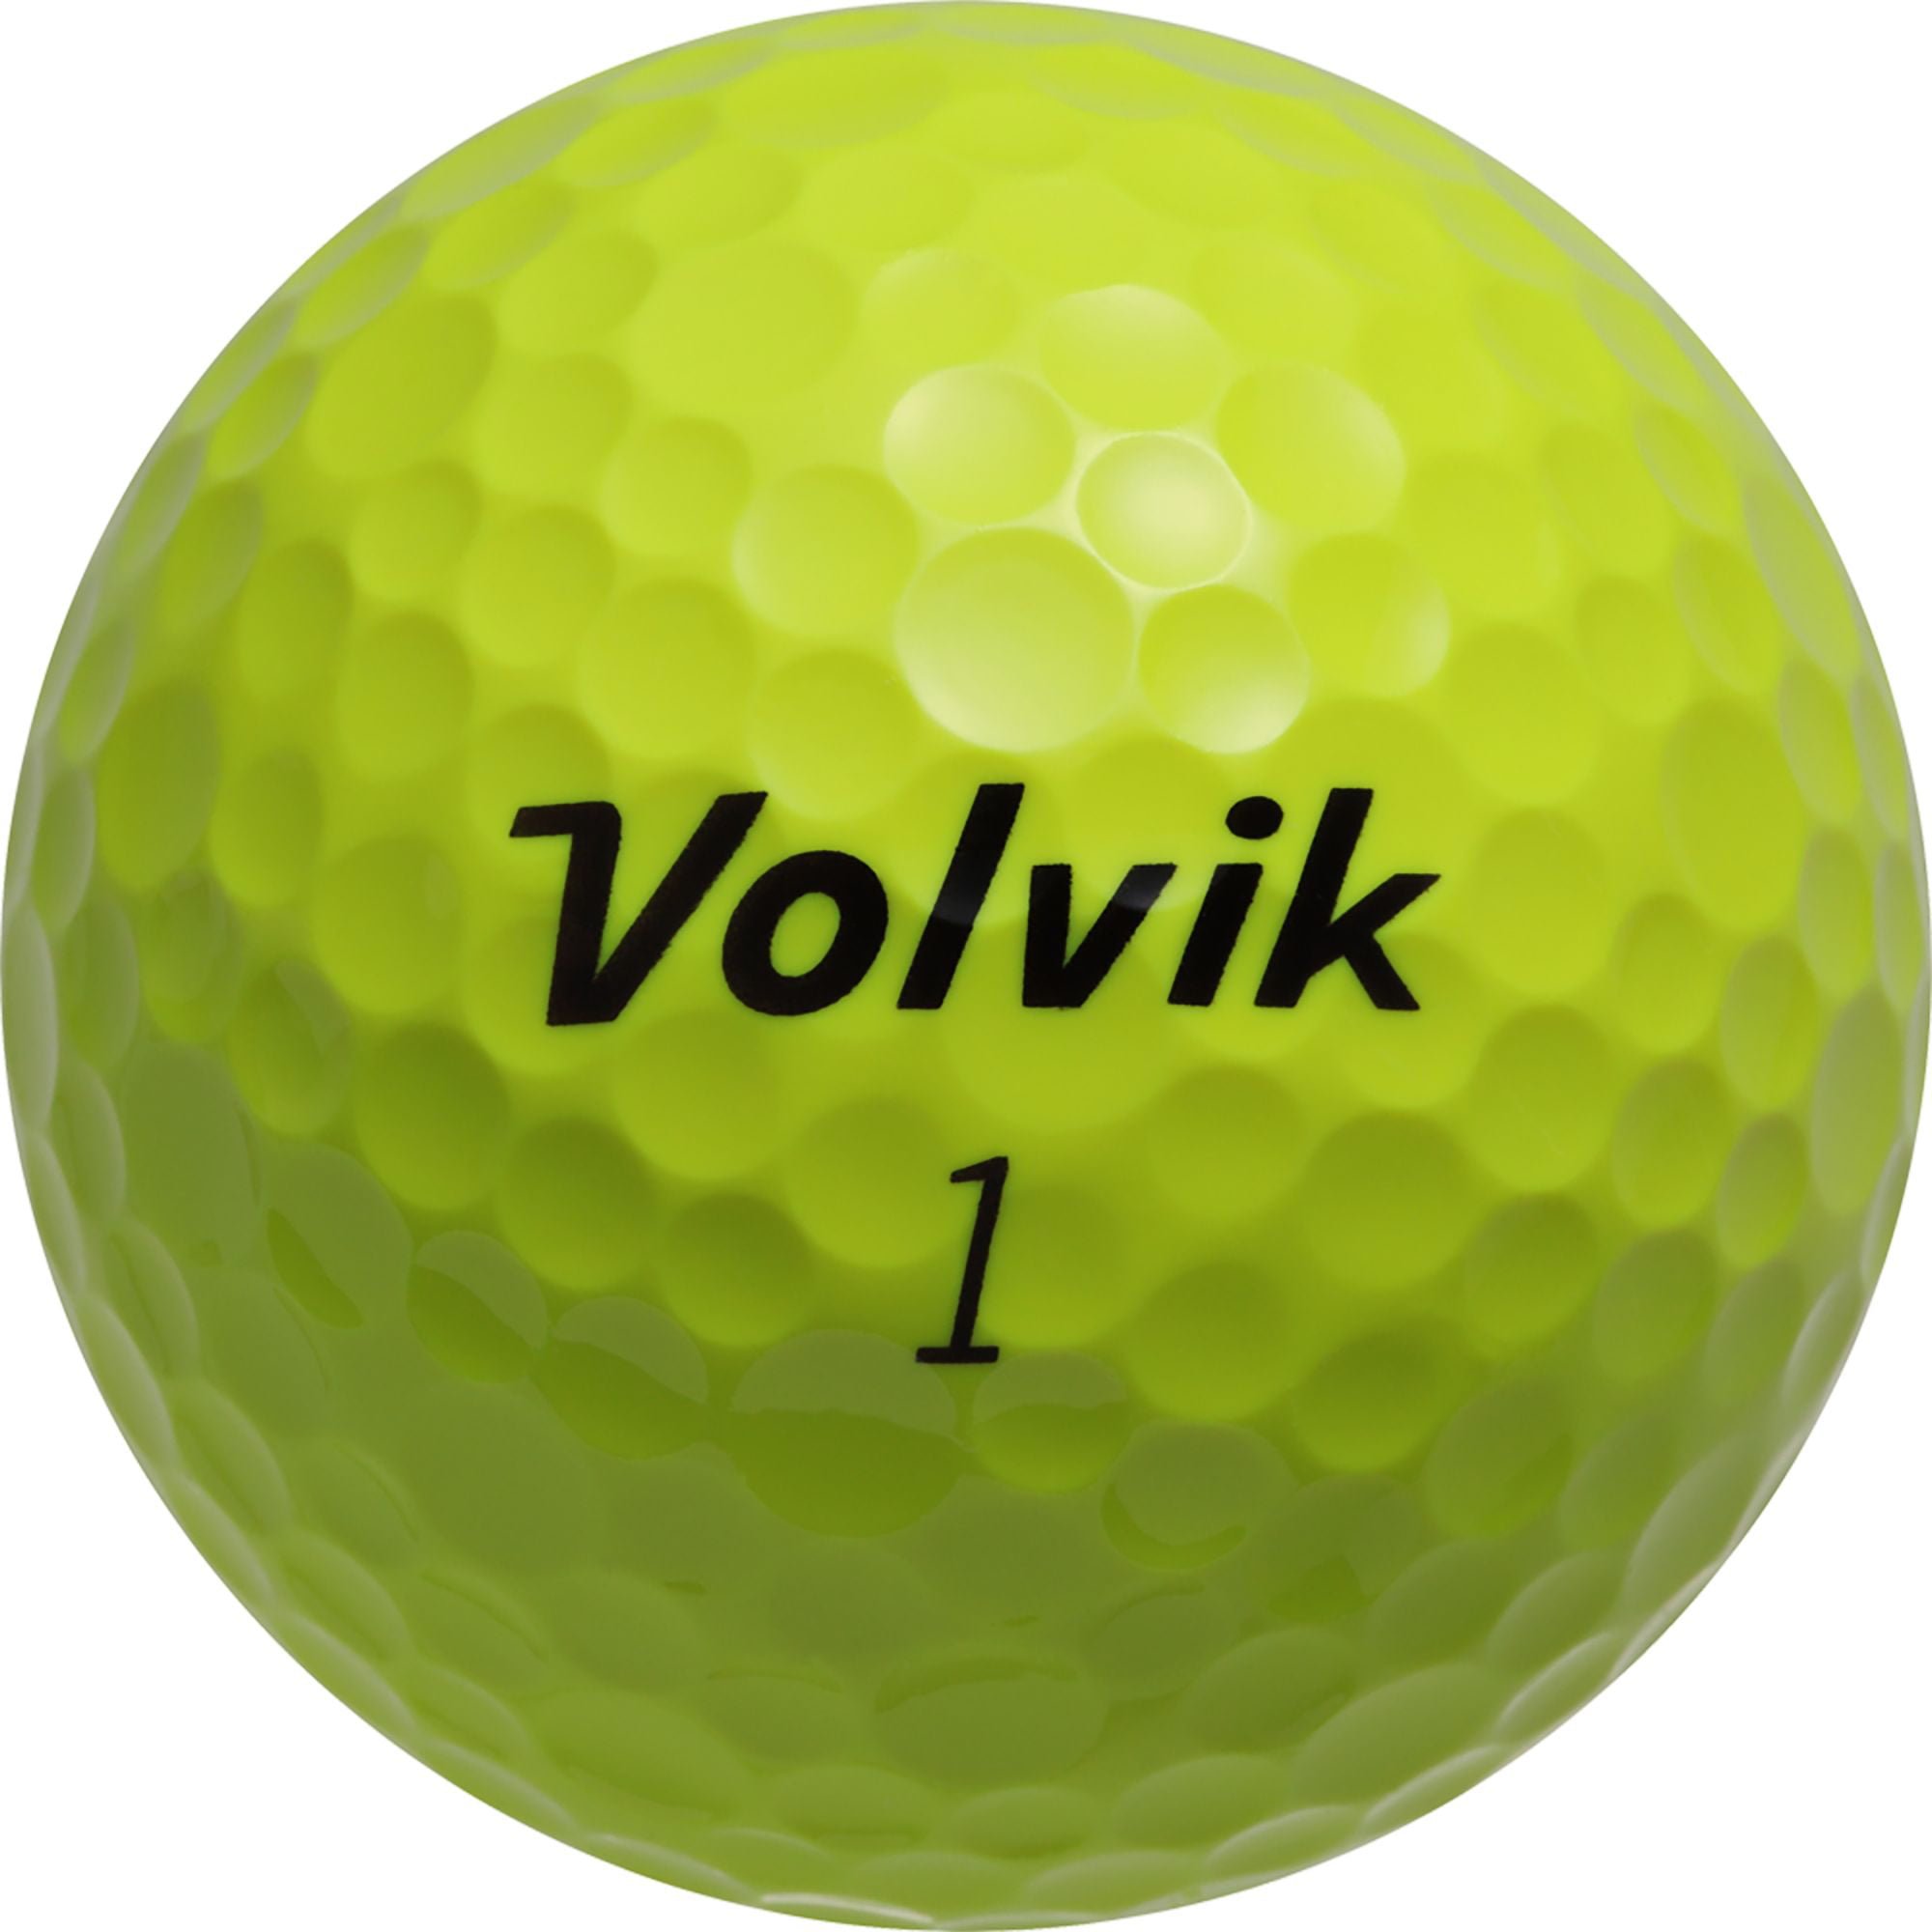 Volvik 2018 Magma Yellow Golf Balls - Walmart.com